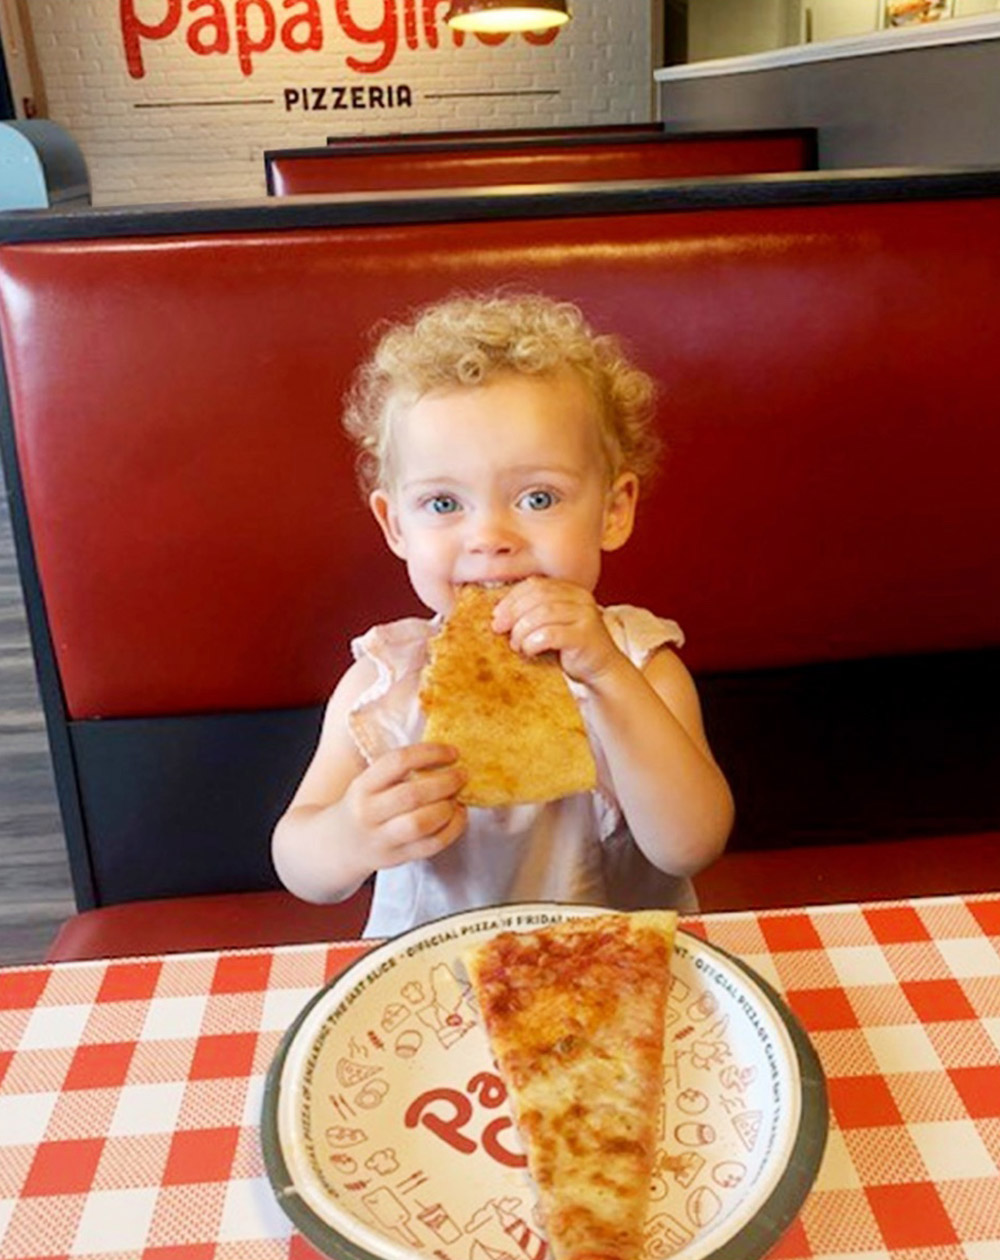 Child enjoying D'Angelo's pizza